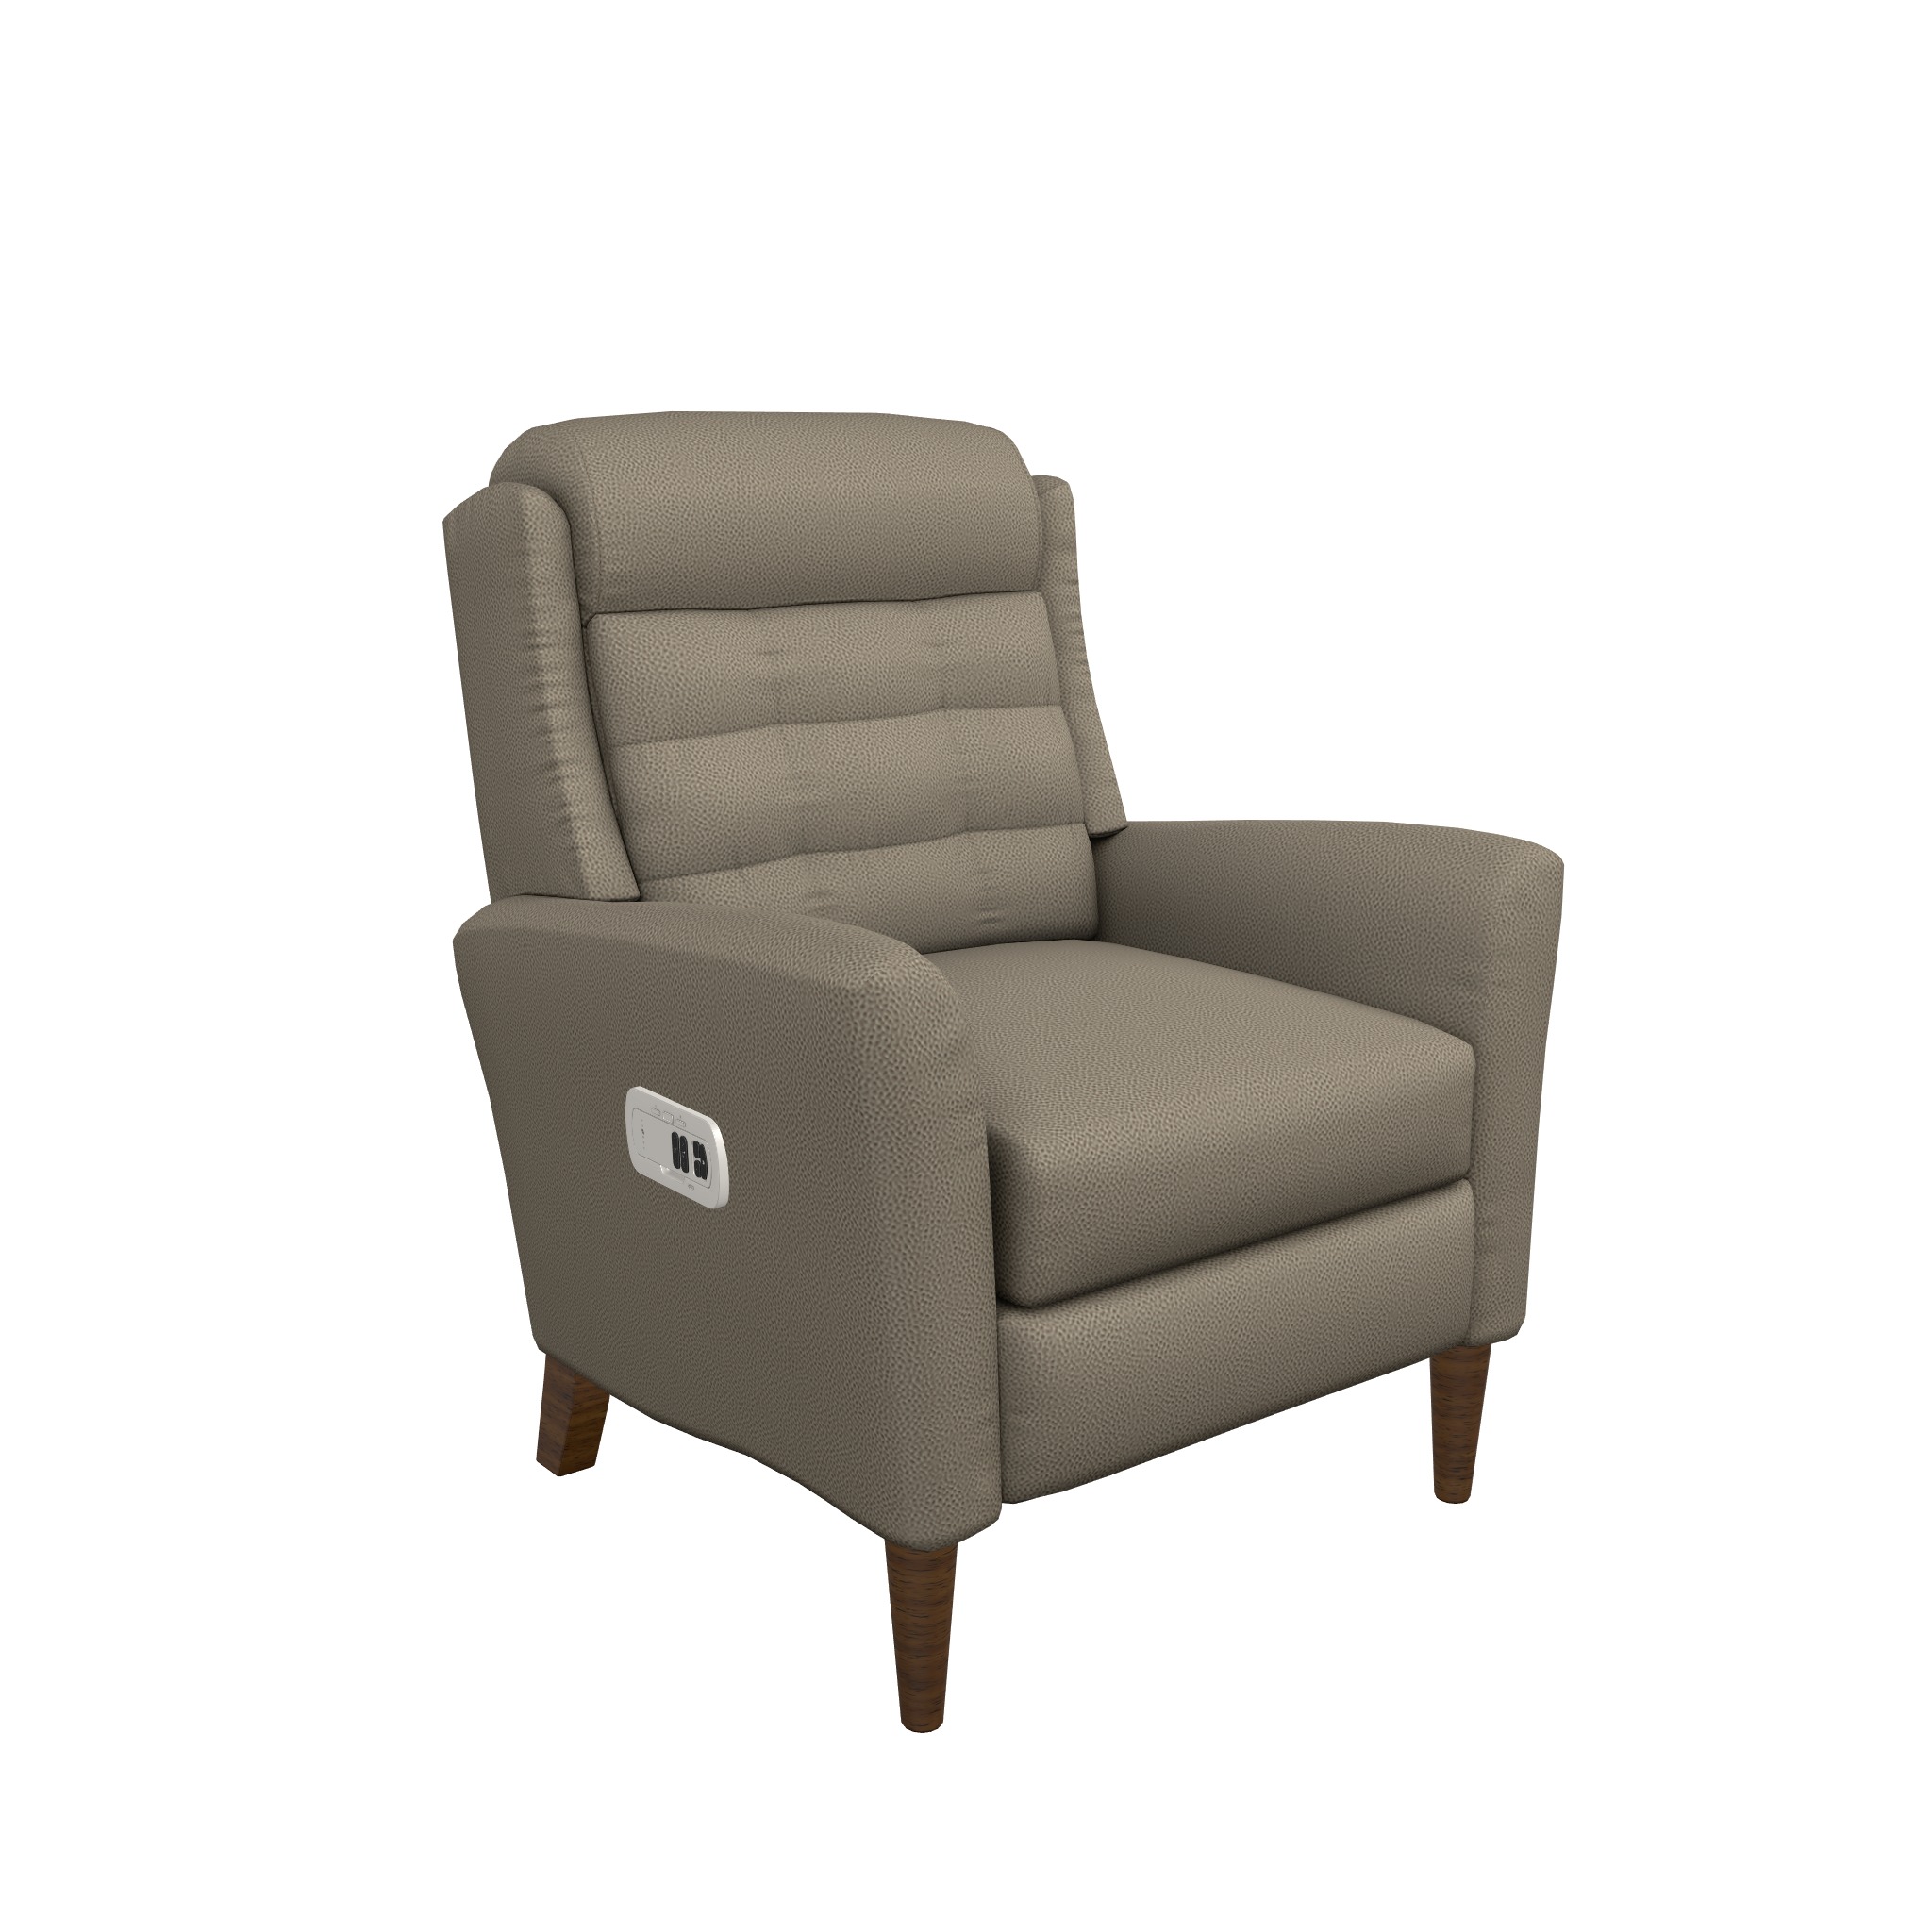 Image - 1 - Brentwood Fabric High Leg Recliner Chair